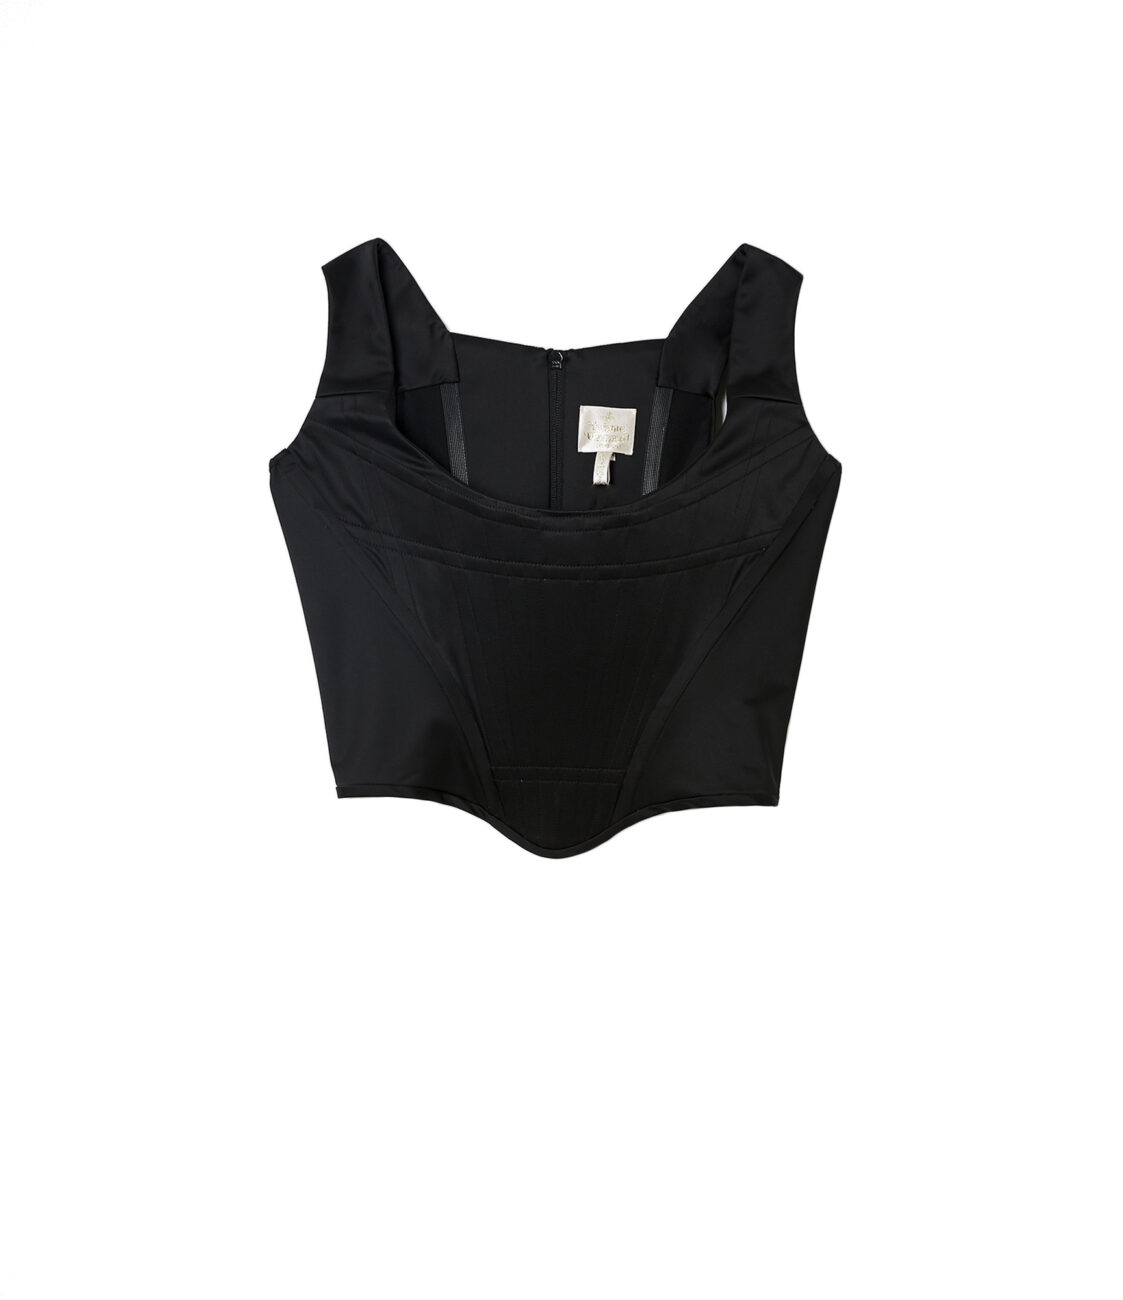 Black corset by Vivienne Westwood